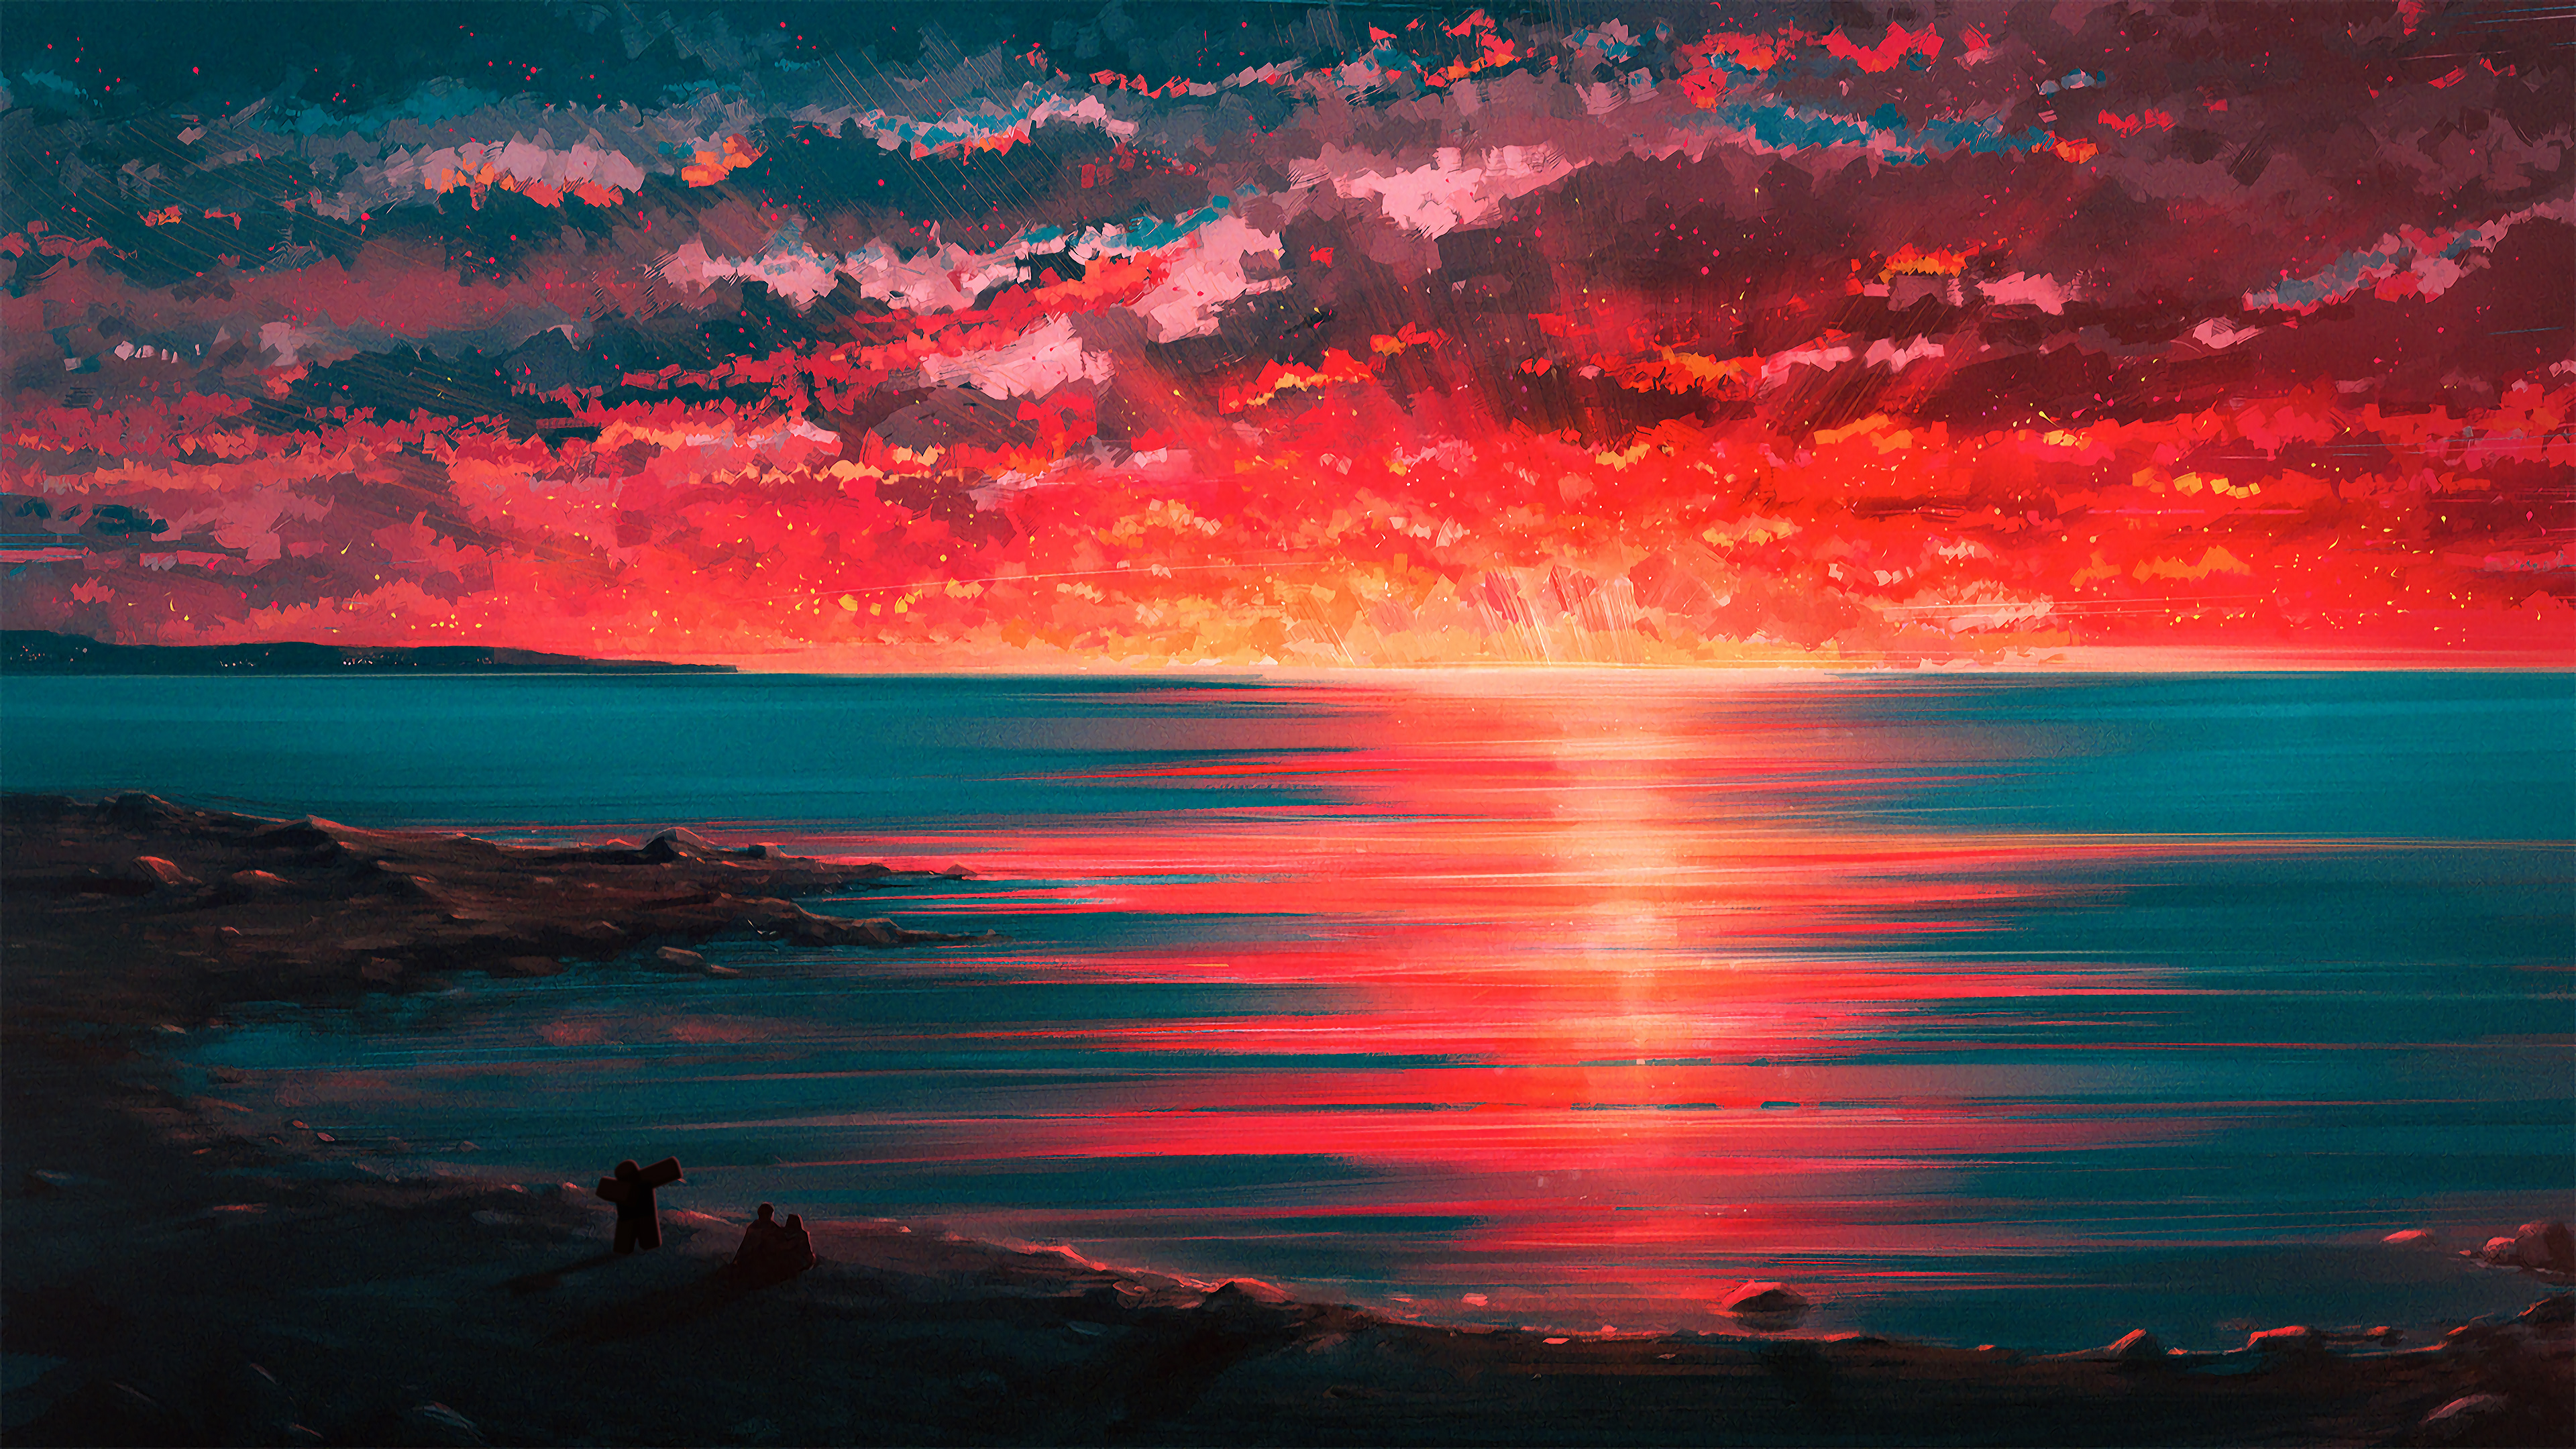 Sunset Digital Paint 4K